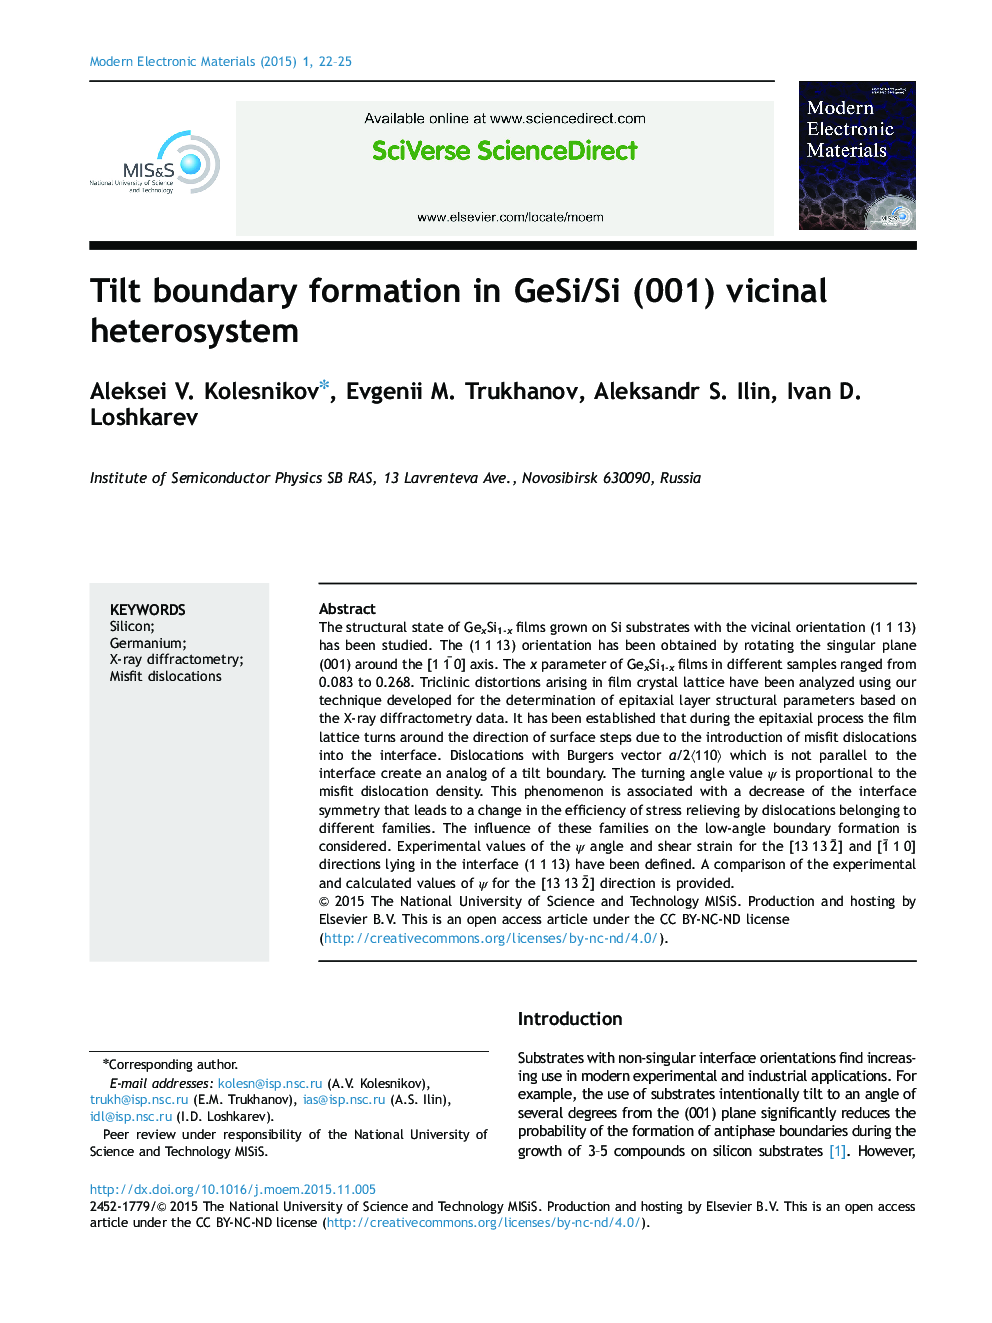 Tilt boundary formation in GeSi/Si (001) vicinal heterosystem 